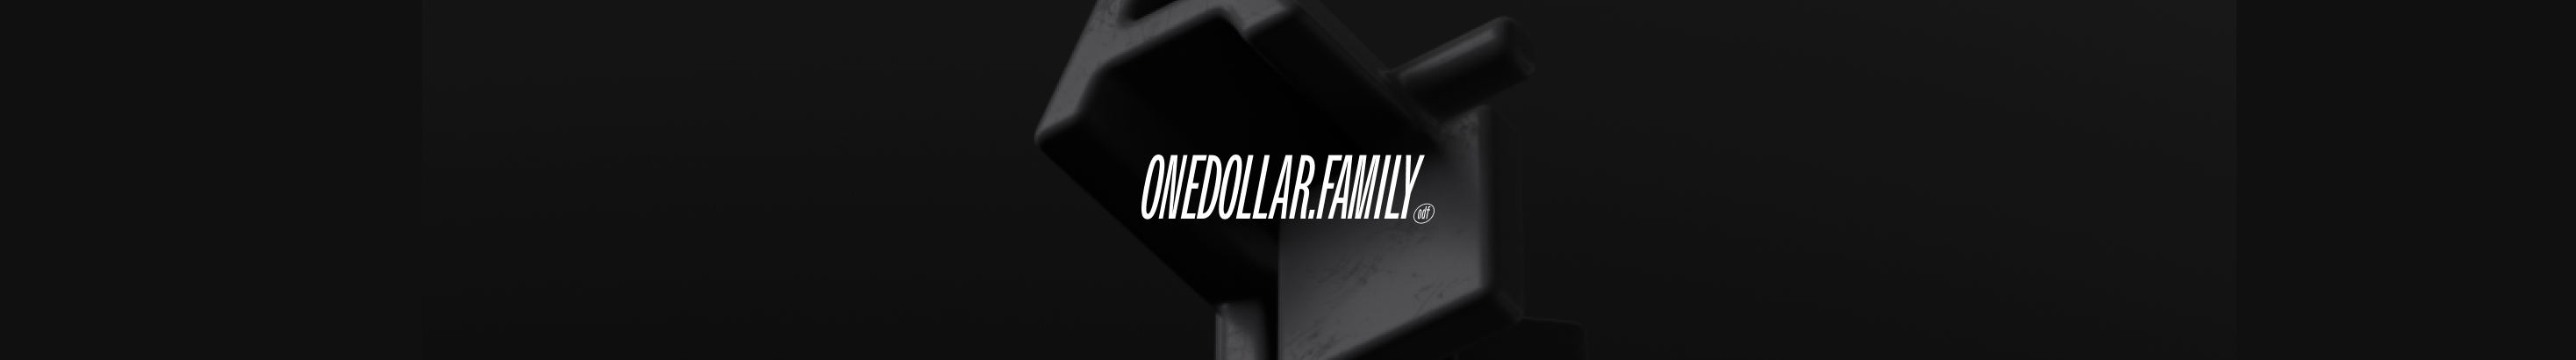 Profielbanner van onedollar. family